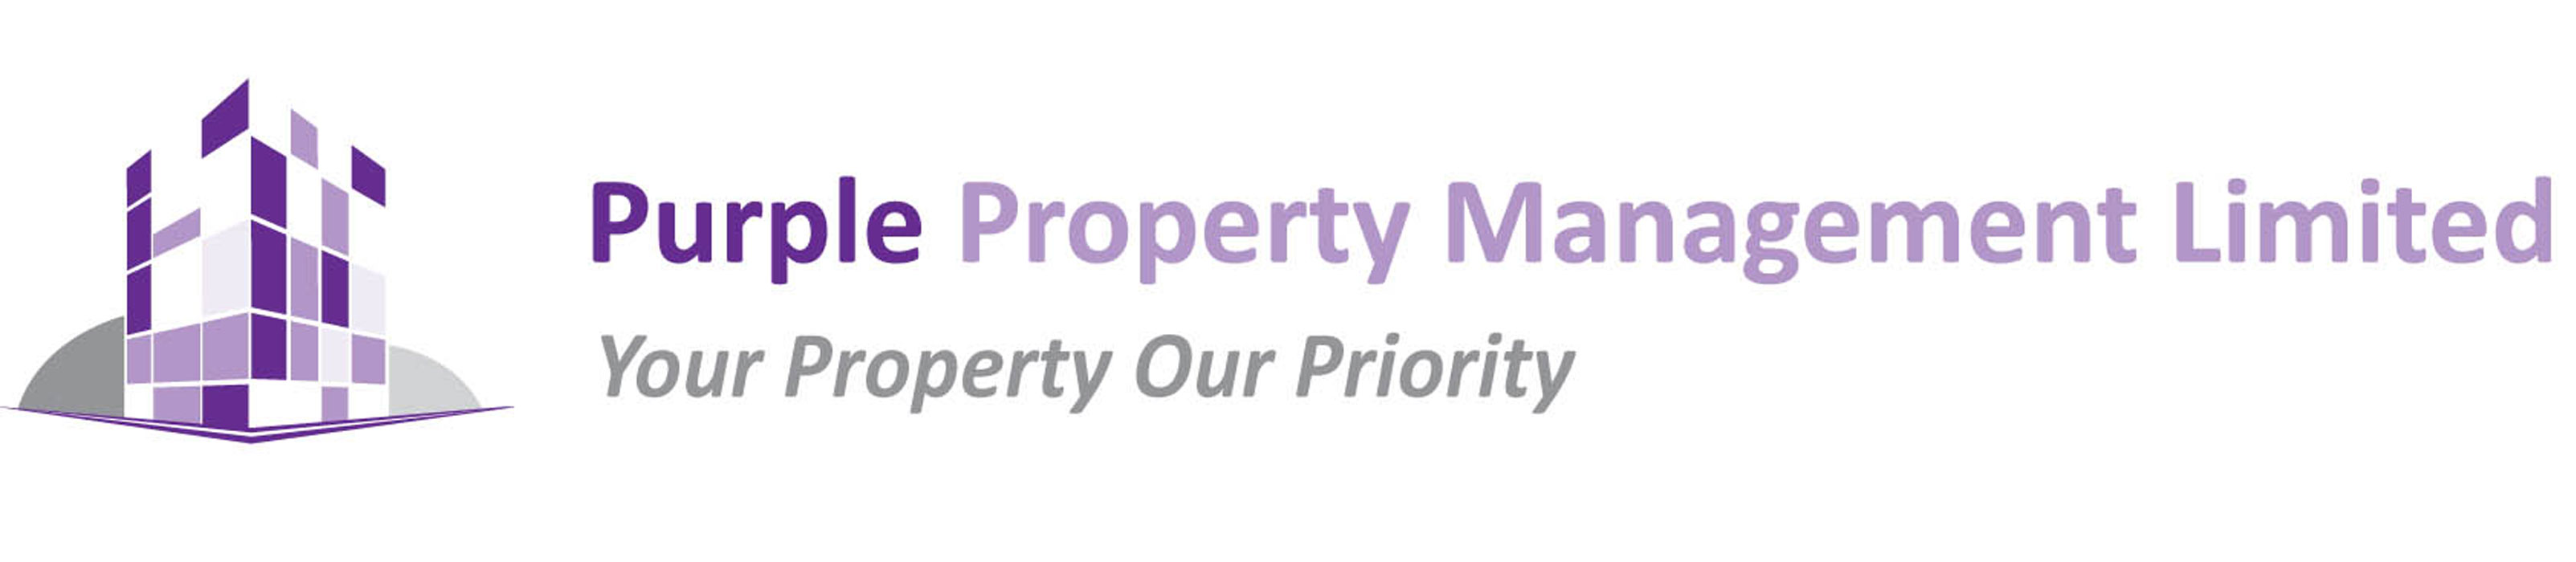 Purple Property Management Limited